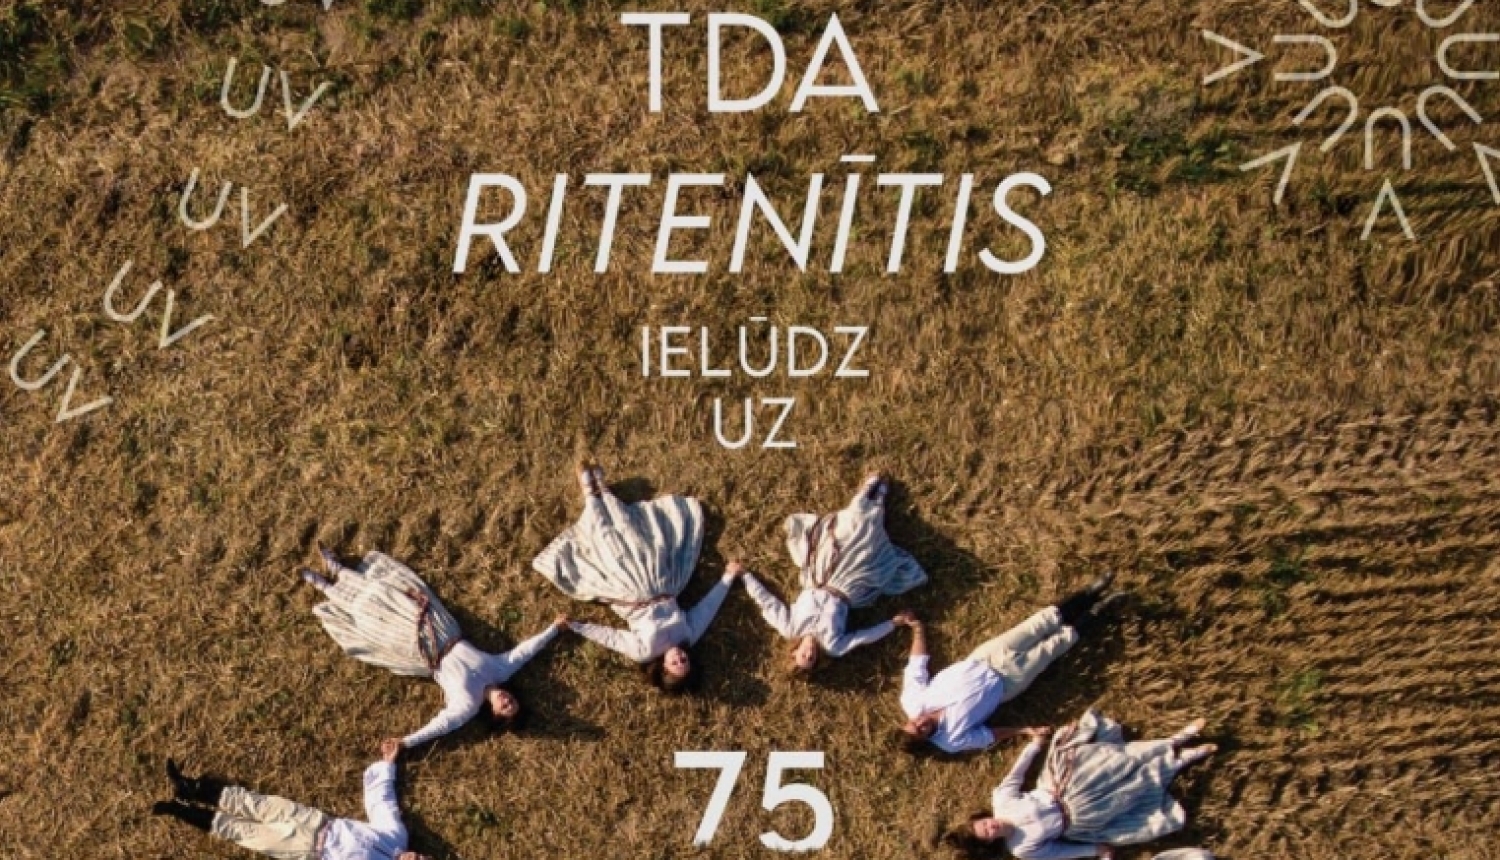 TDA "Ritenītis" 75